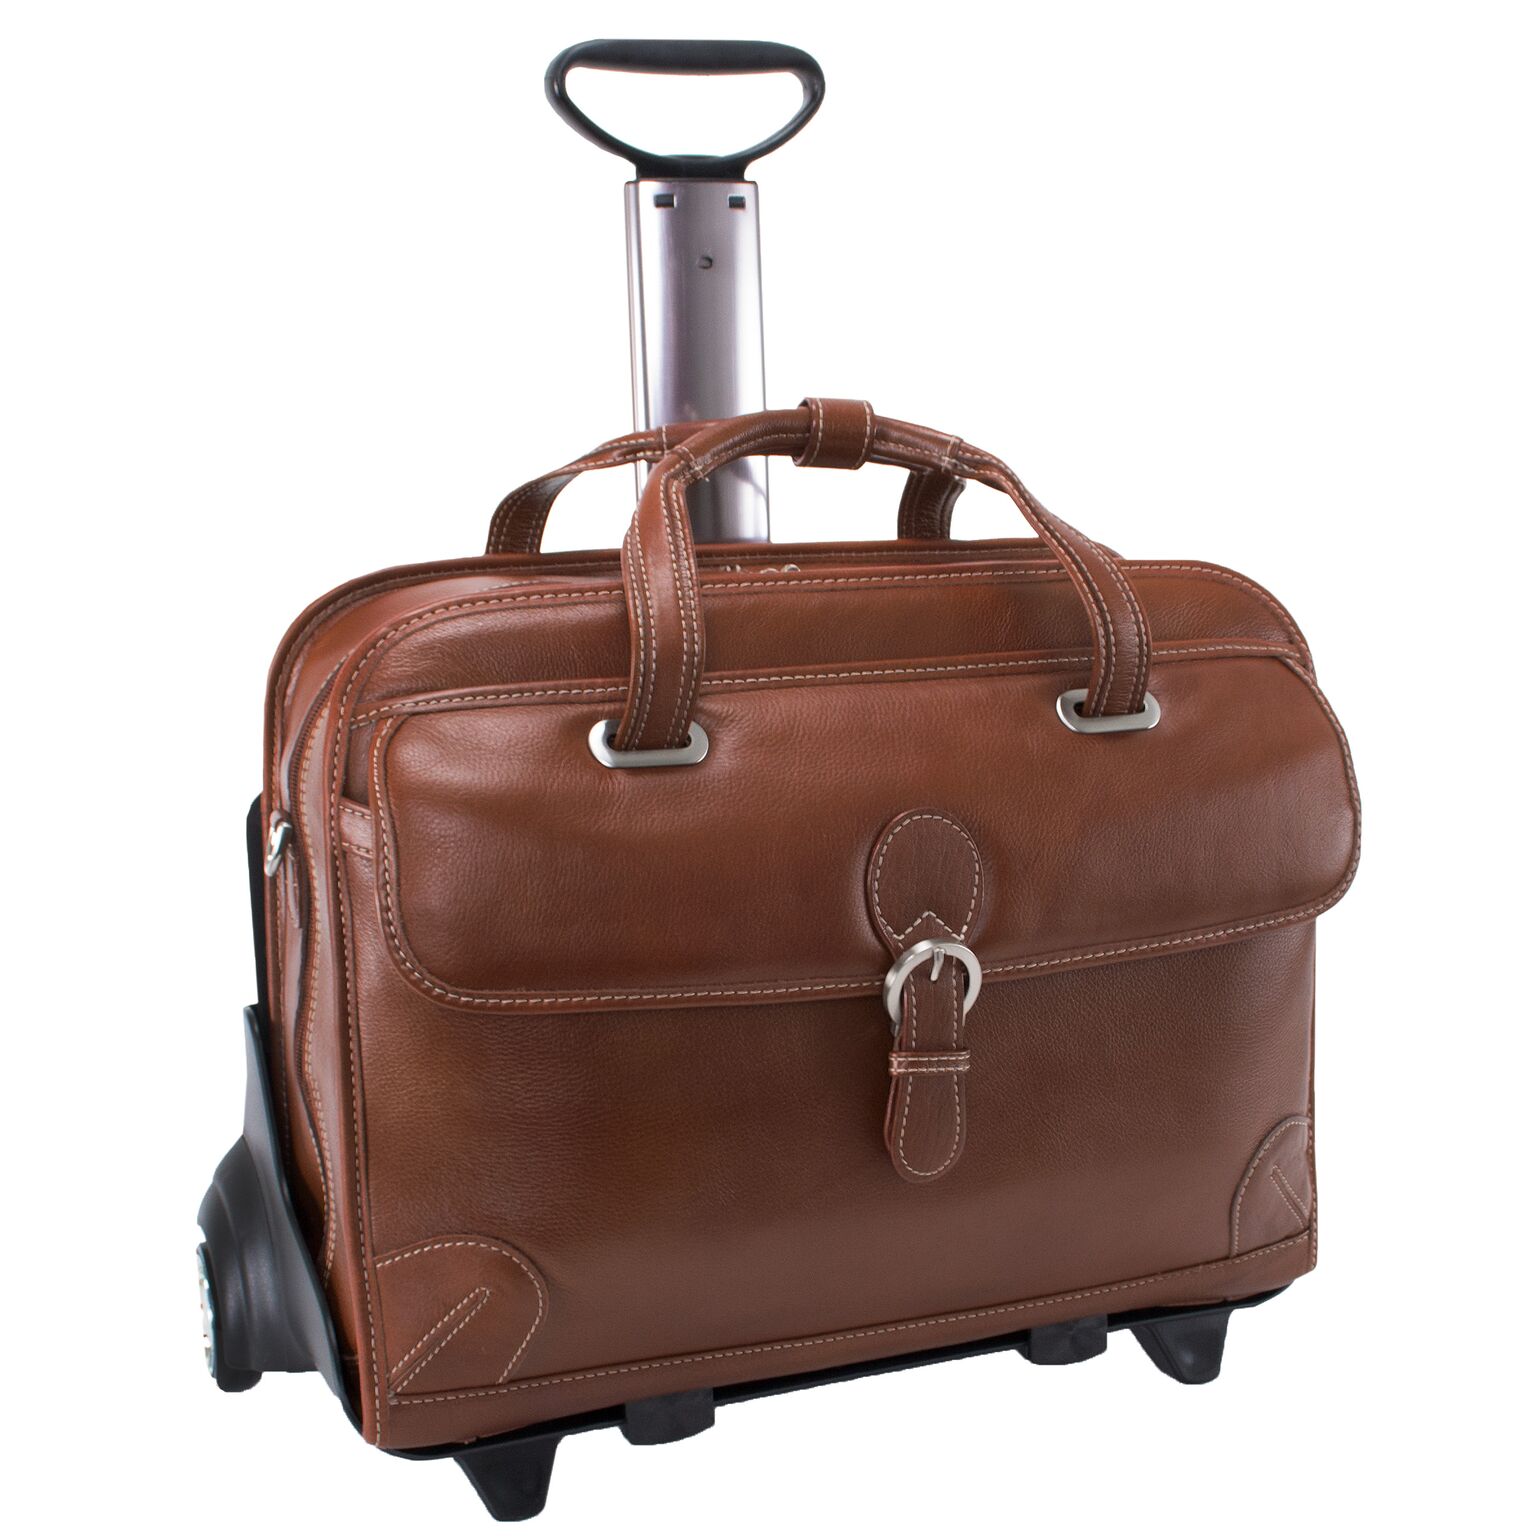 Picture of McKlein 45294 Carugetto Cognac Leather Detachable Wheeled Laptop Case